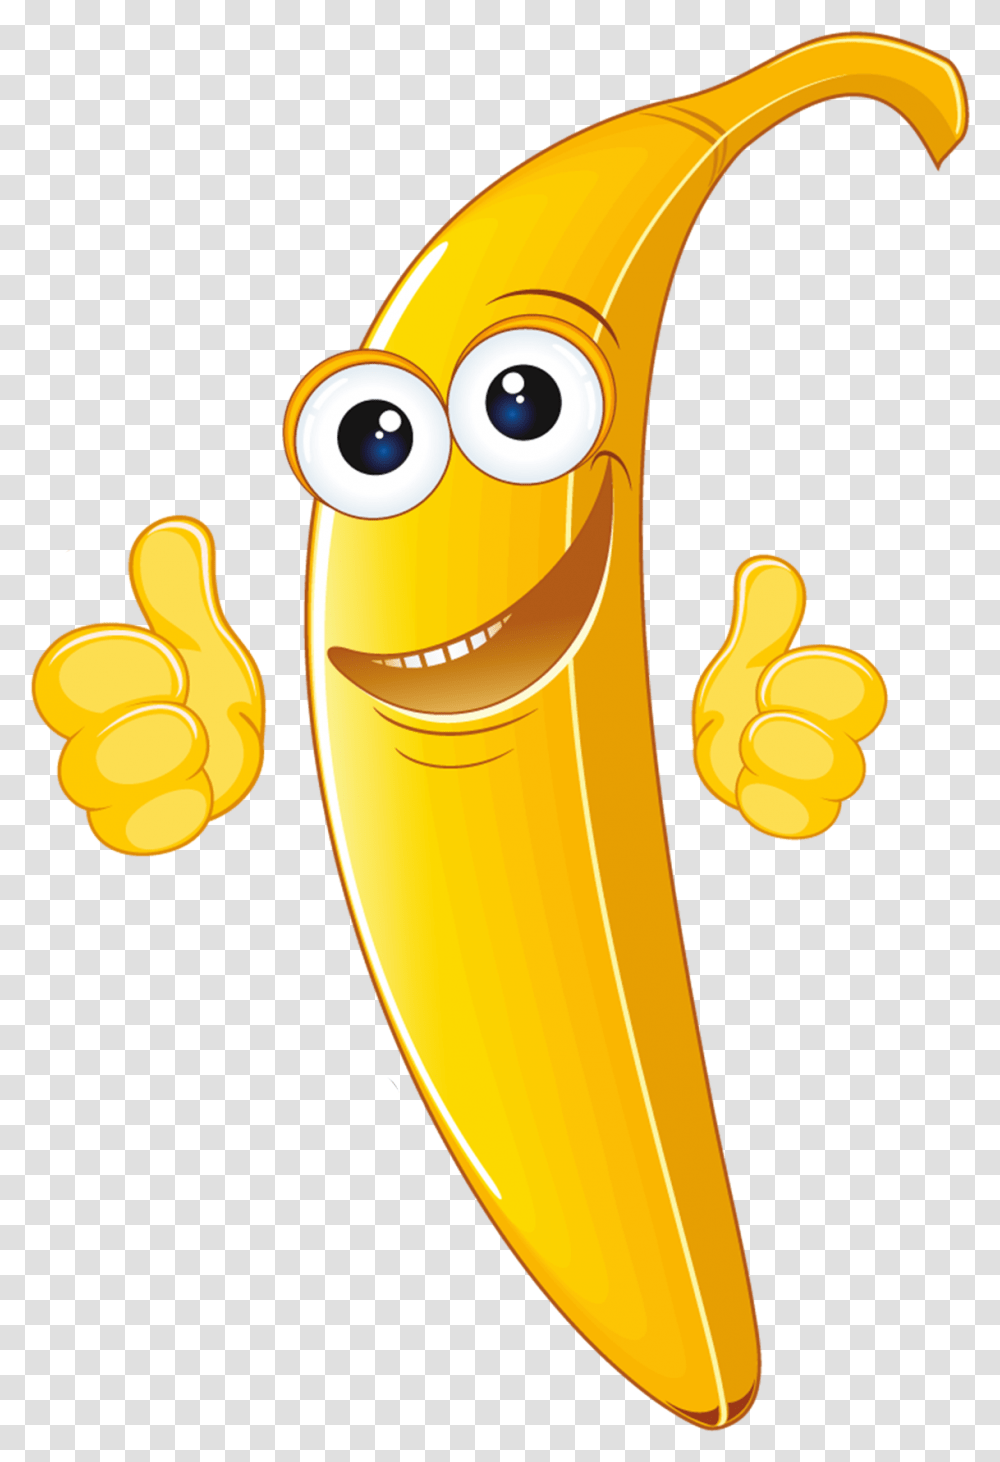 Download Smiling Animation Banana Cartoon Free Trivia True Or False Questions Funny, Plant, Fruit, Food Transparent Png